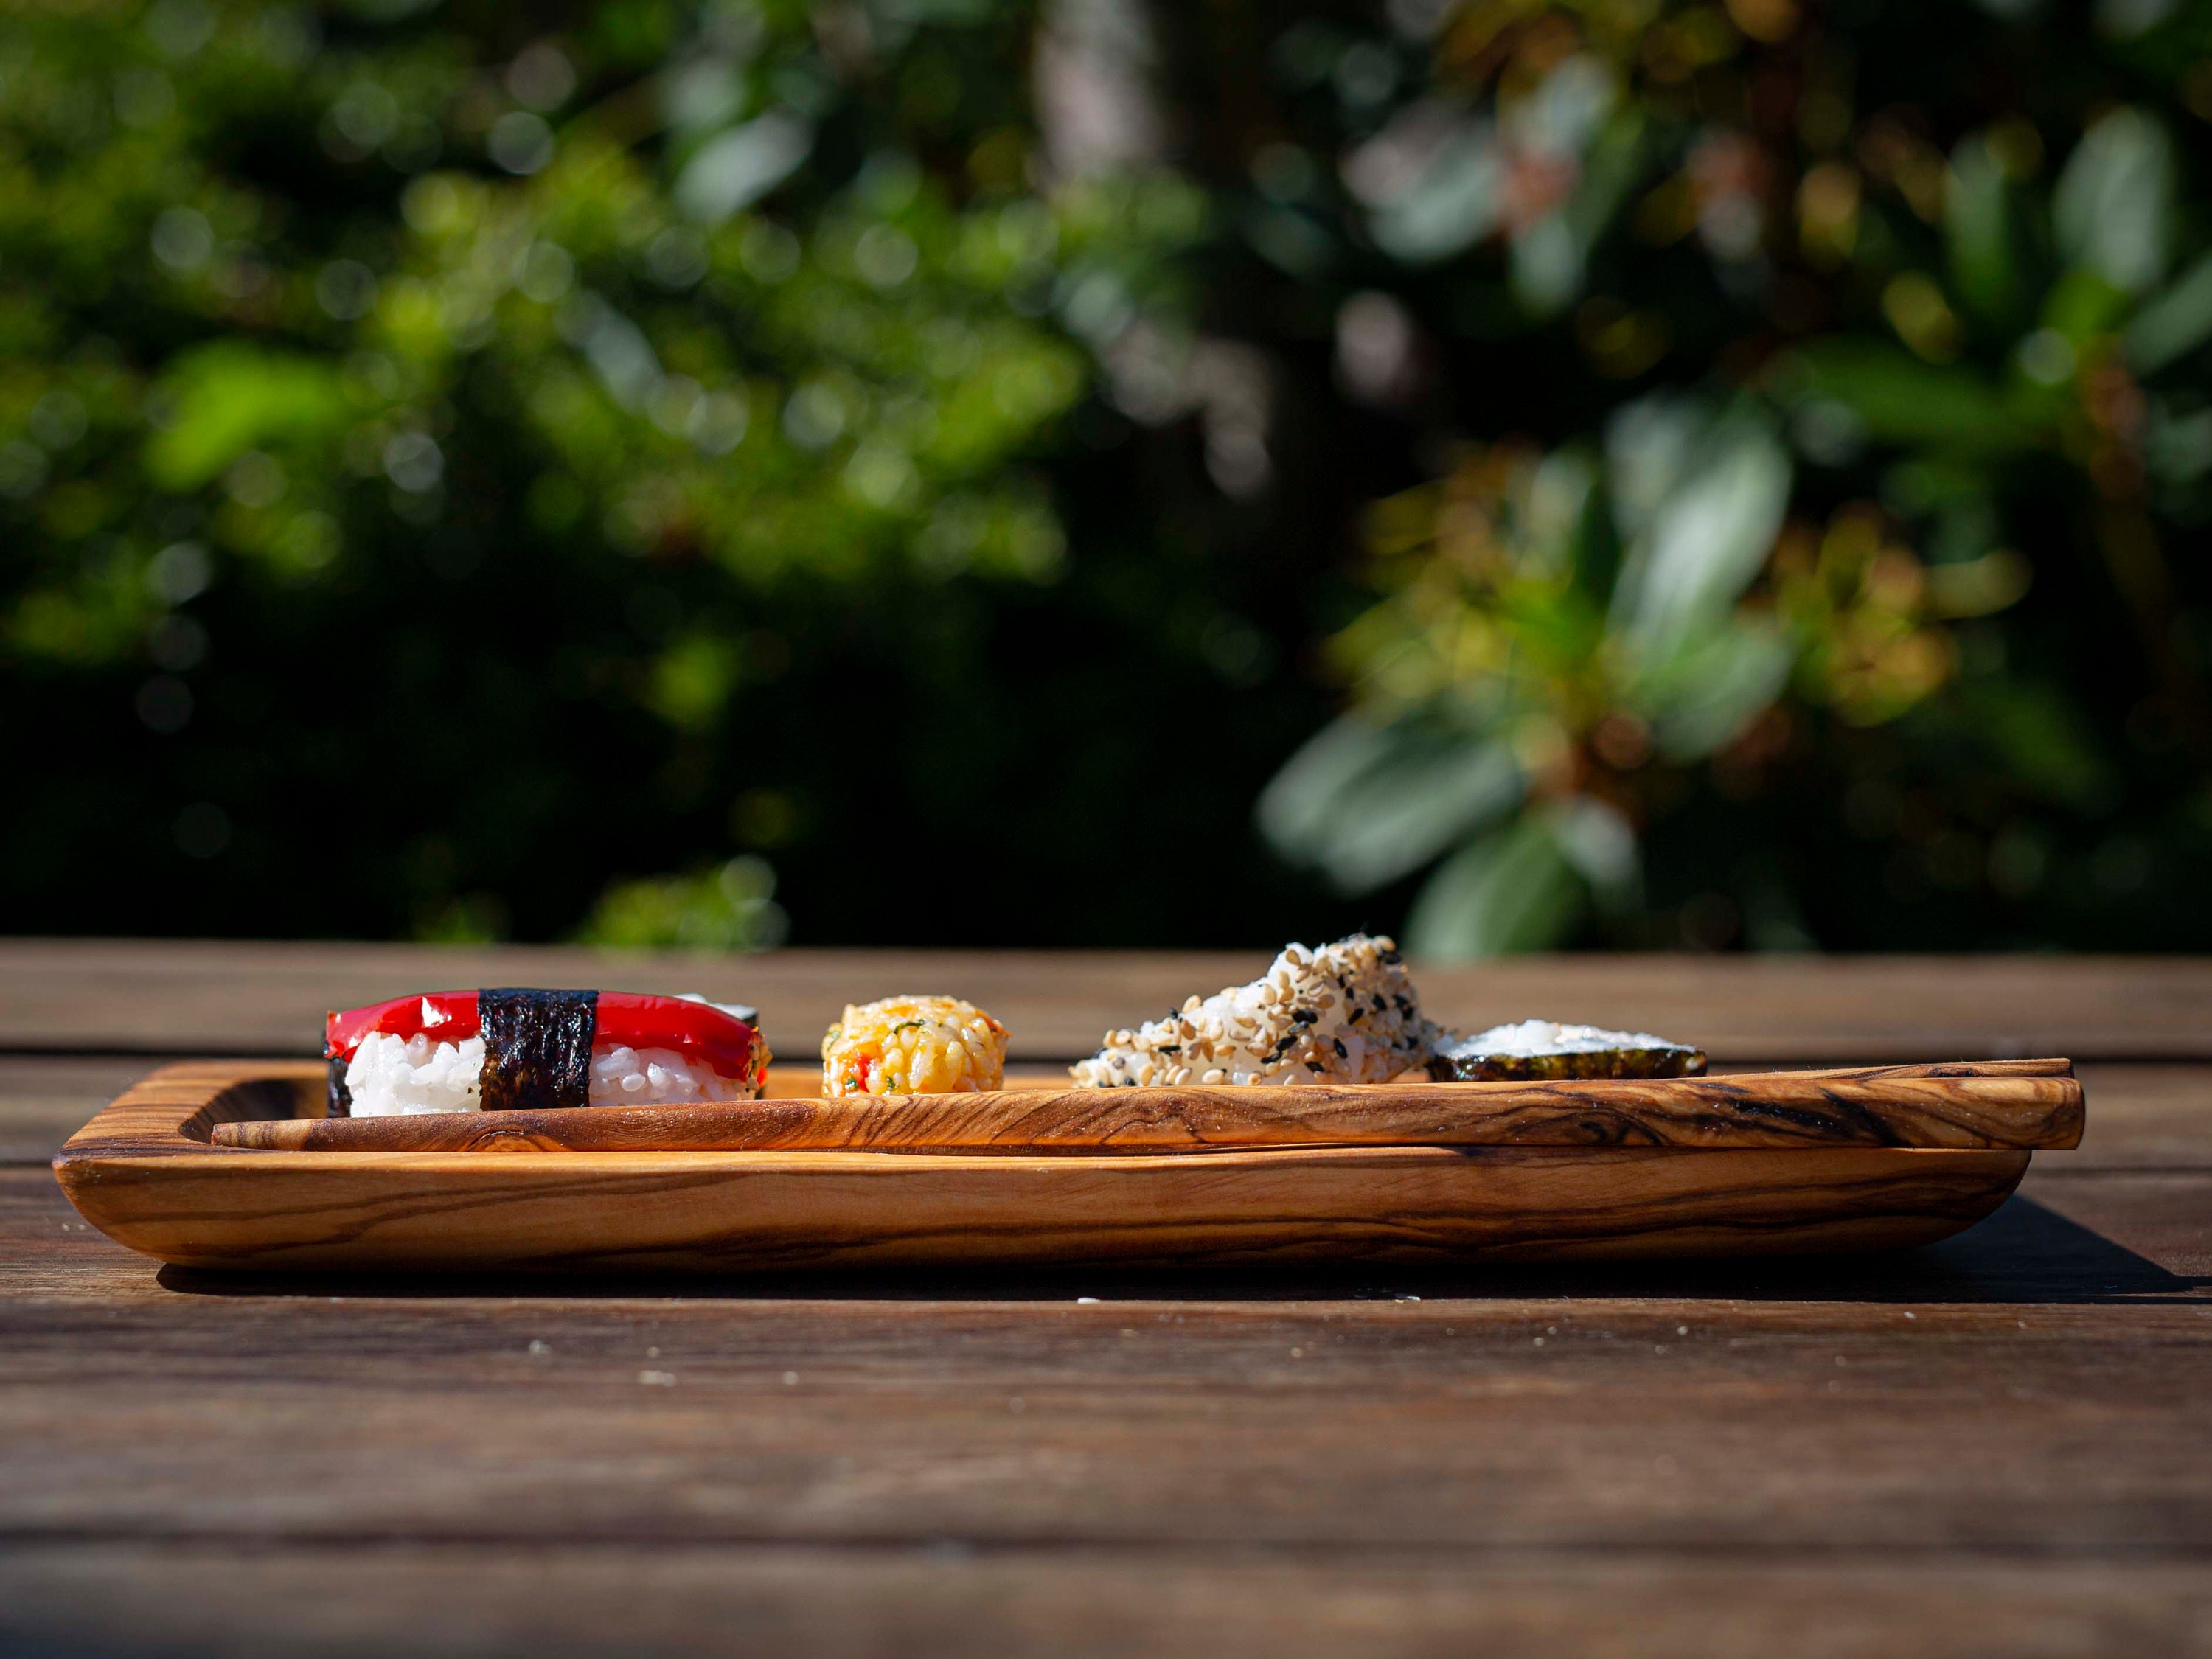 Personalised Sushi Gift Set. Serving Board & Reusable Chopsticks